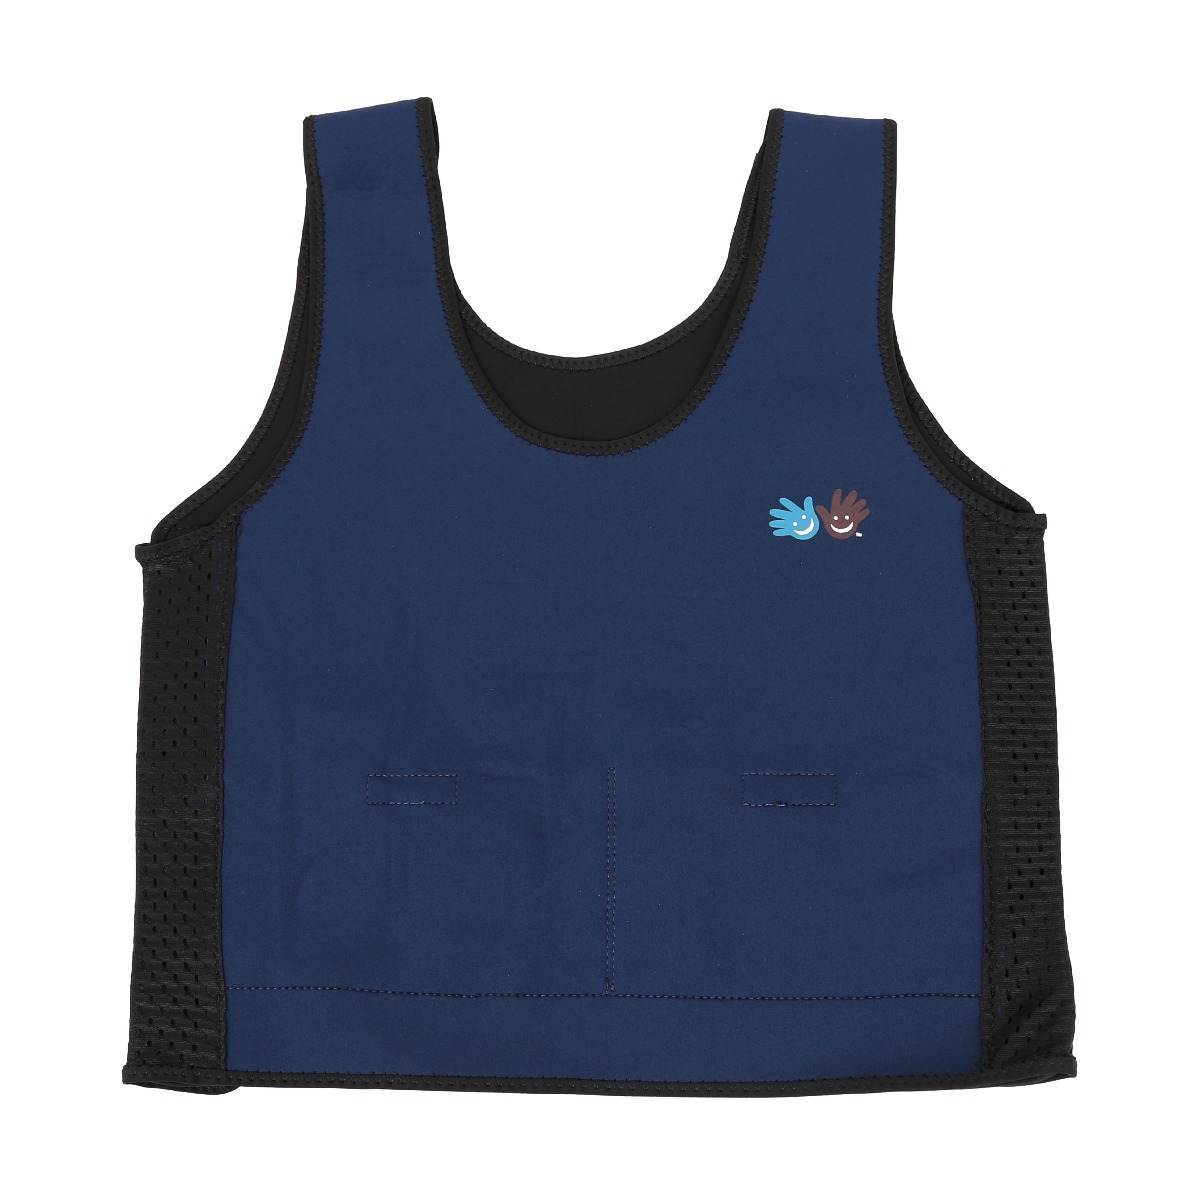 Sensory4u Weighted Sensory Compression Vest for Kids (Small) - 6